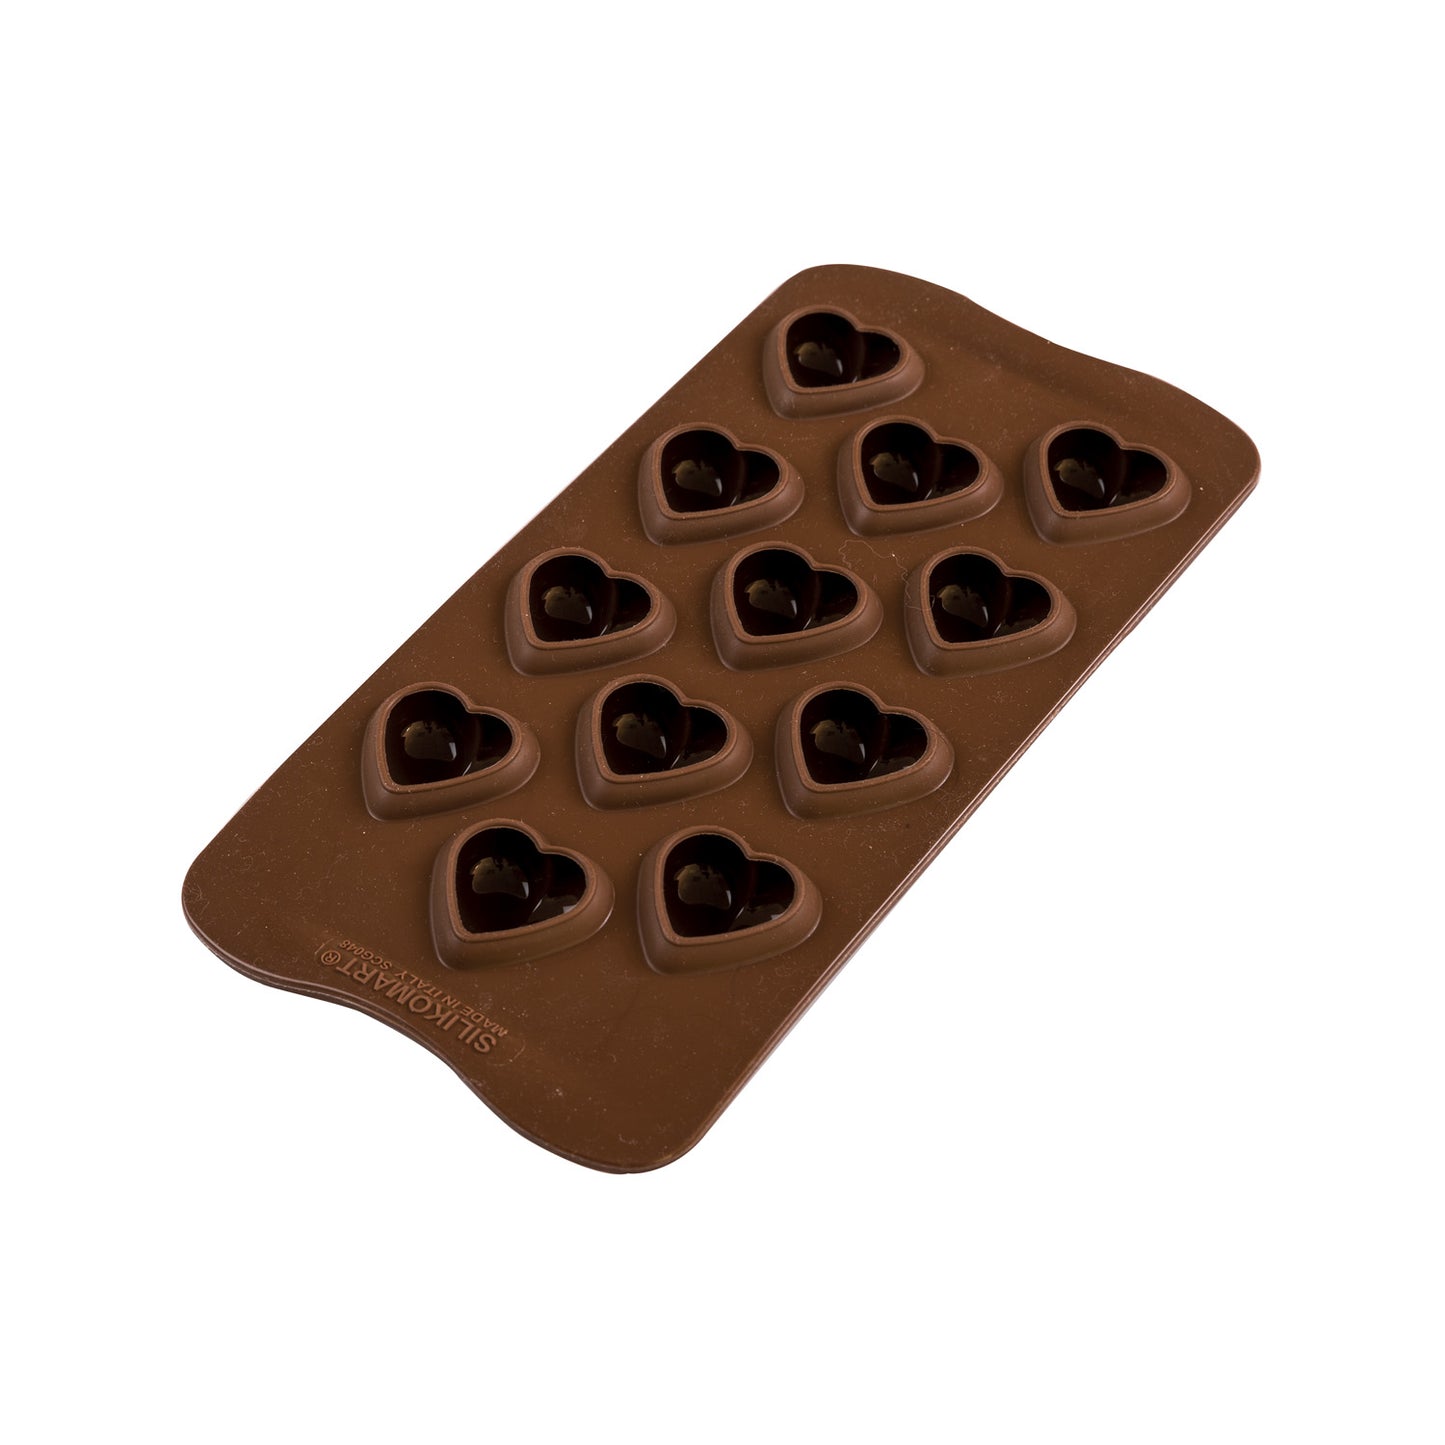 Silikomart - Silikonform - Schokoladenform My Love